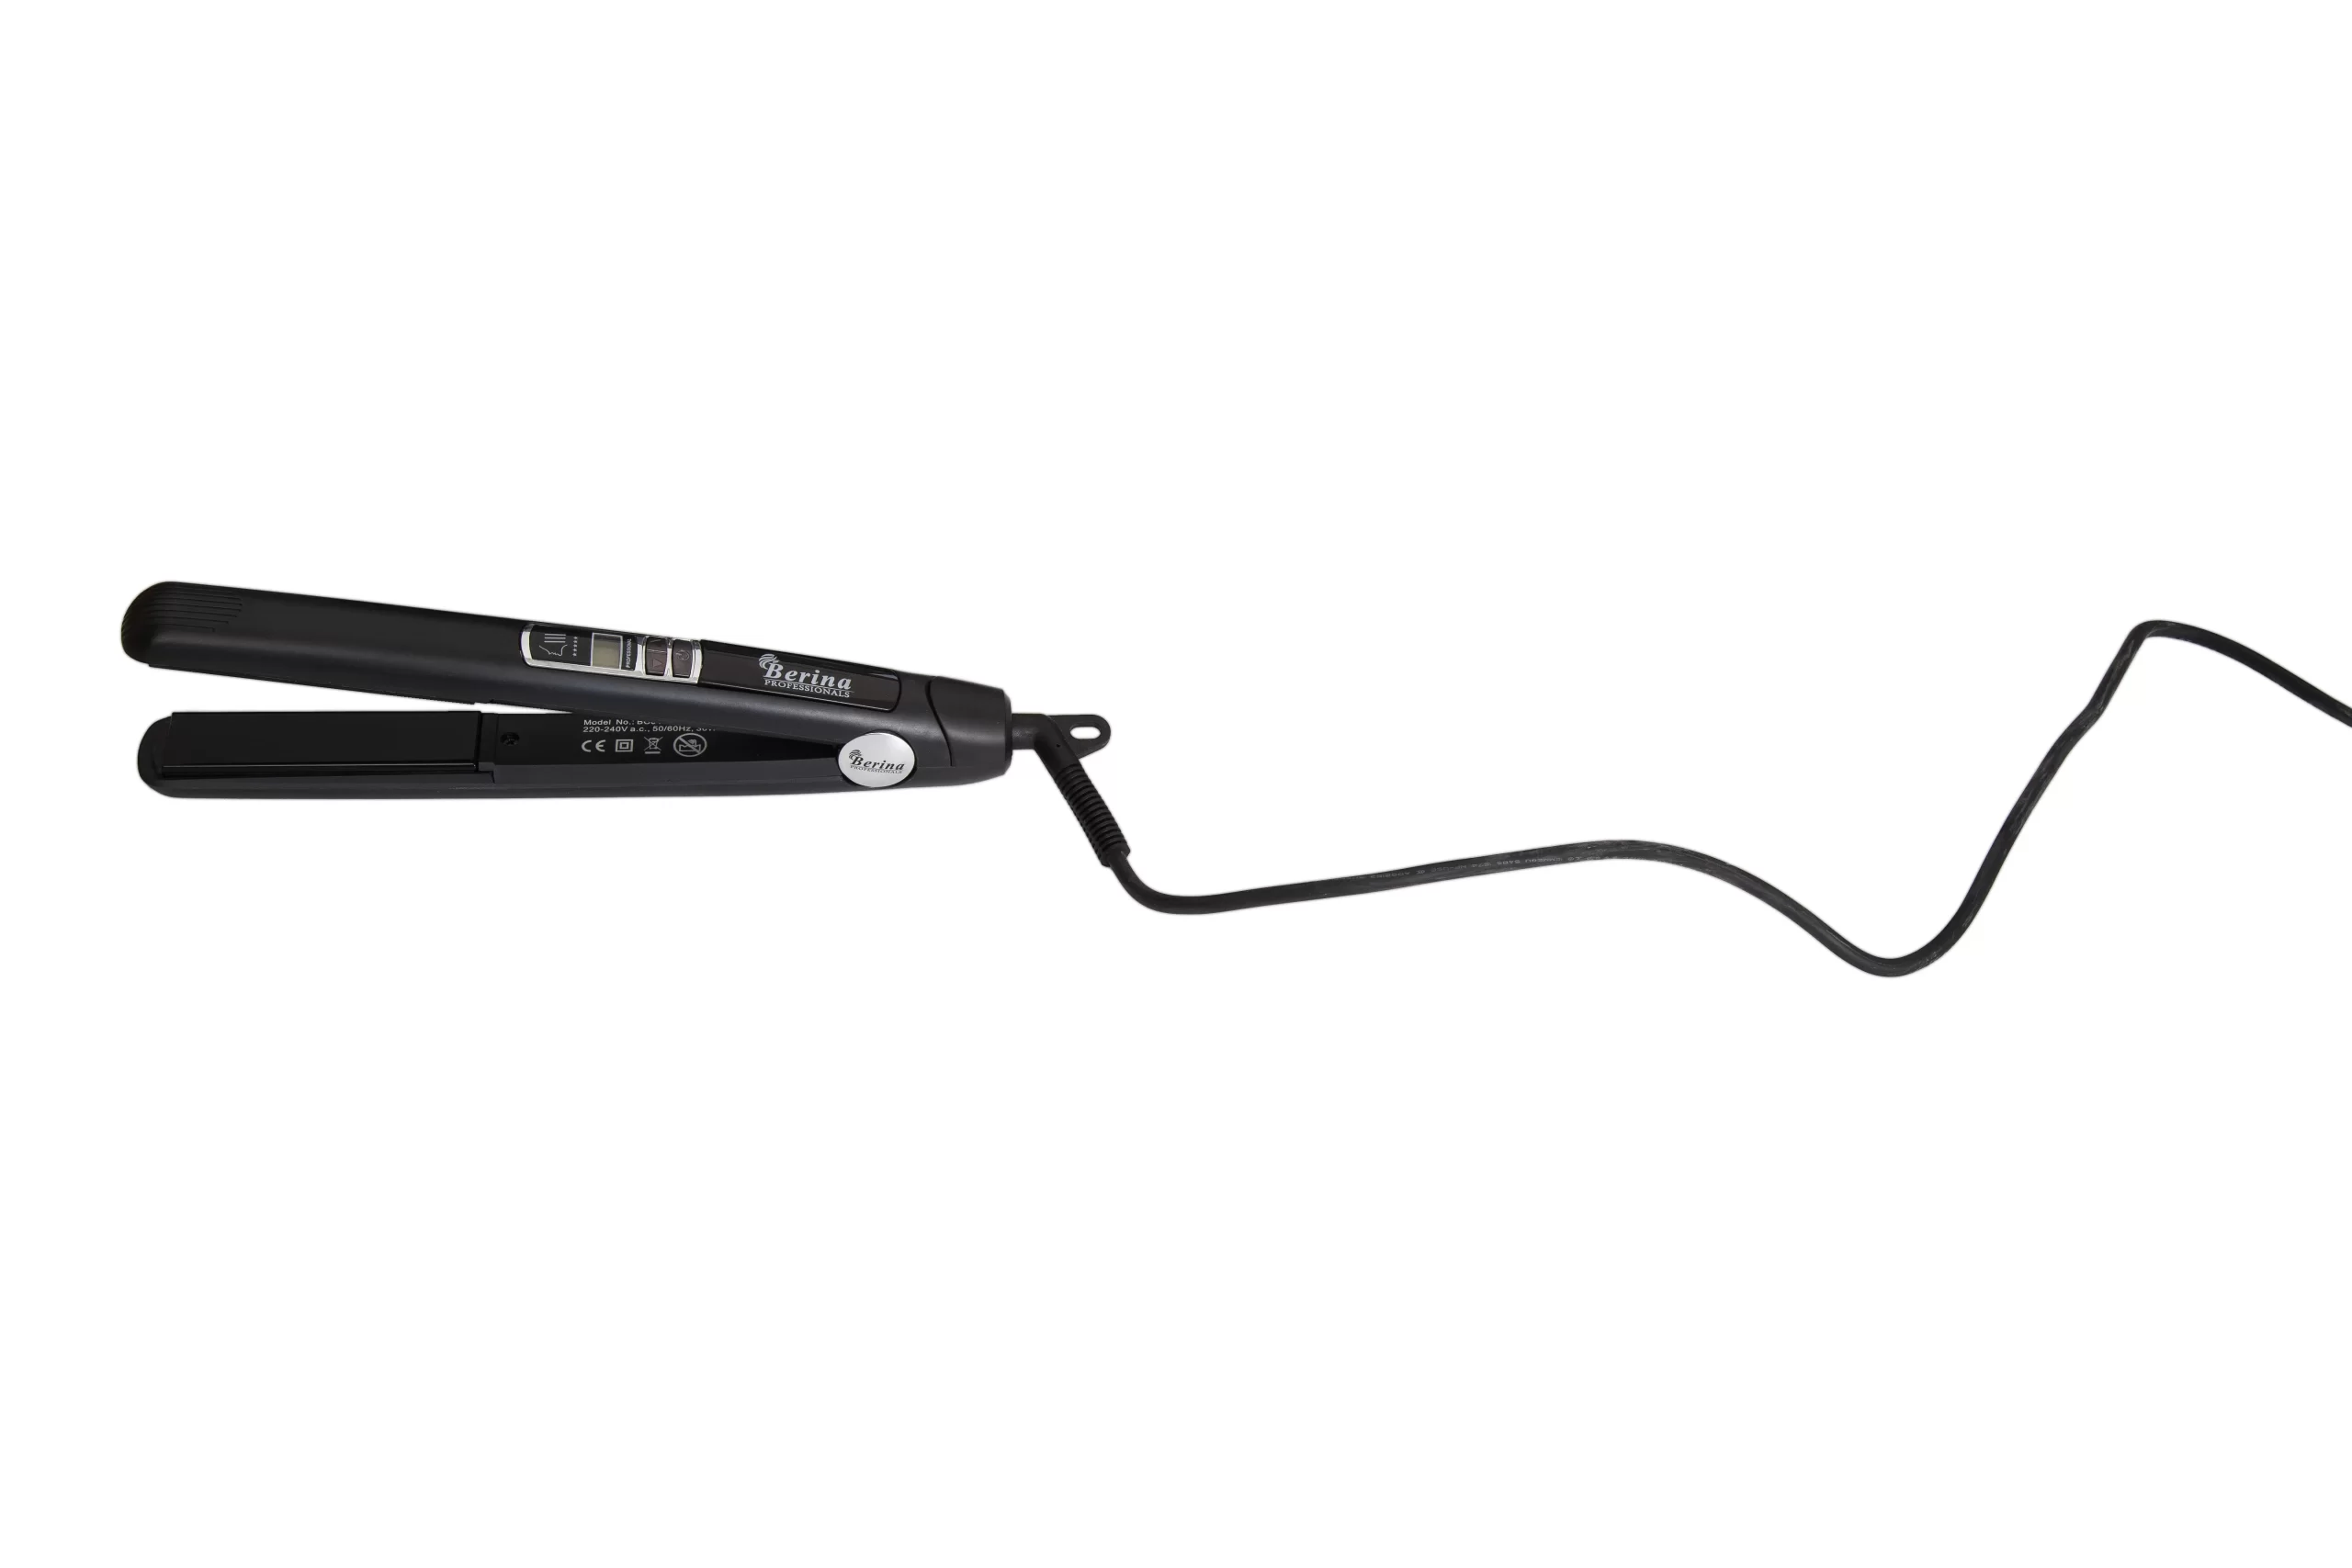 Berina Professional Hair Straightener Digital Control Flat BC-040P